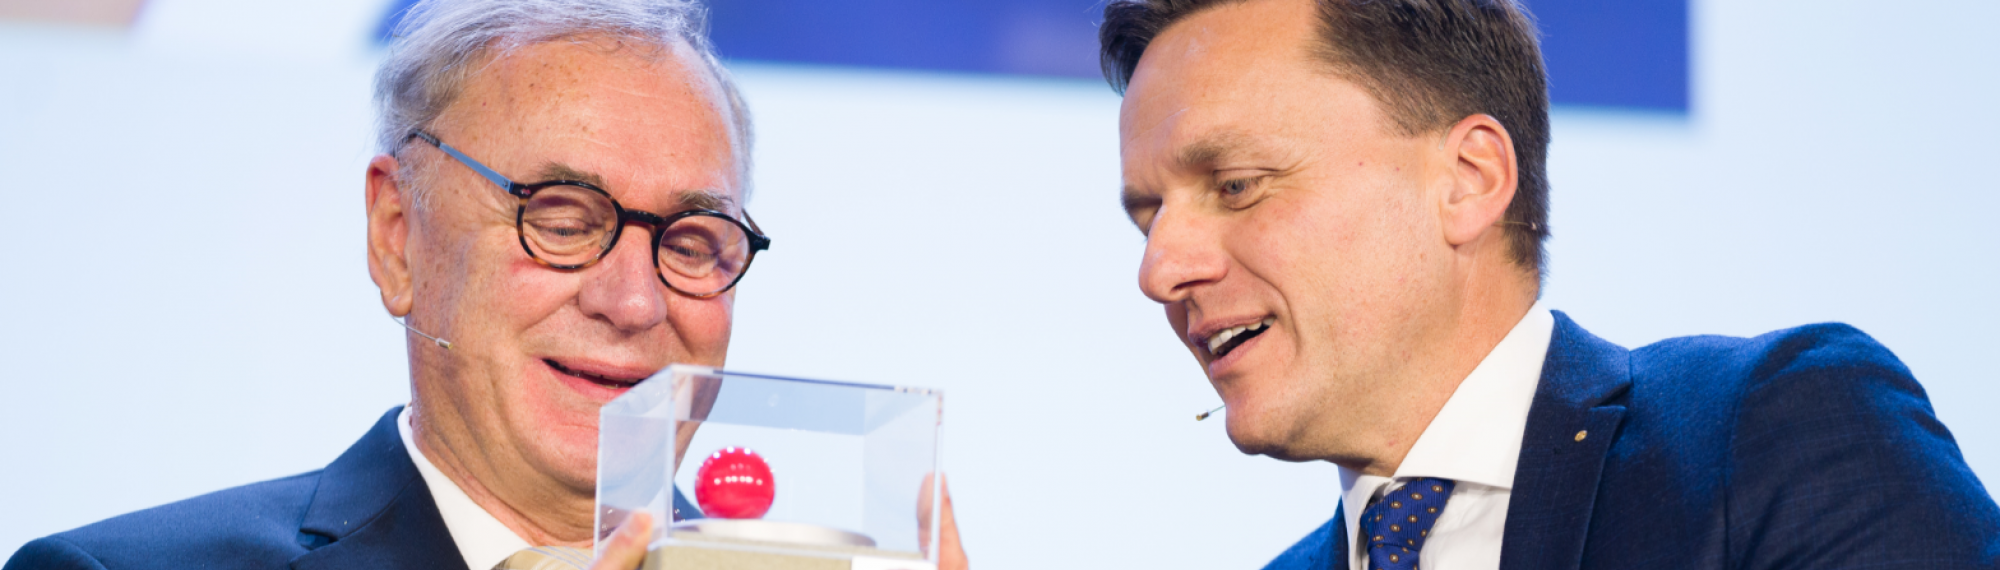 Andreas Gerber und Christoph Häring Prix SVC Nordschweiz 2019